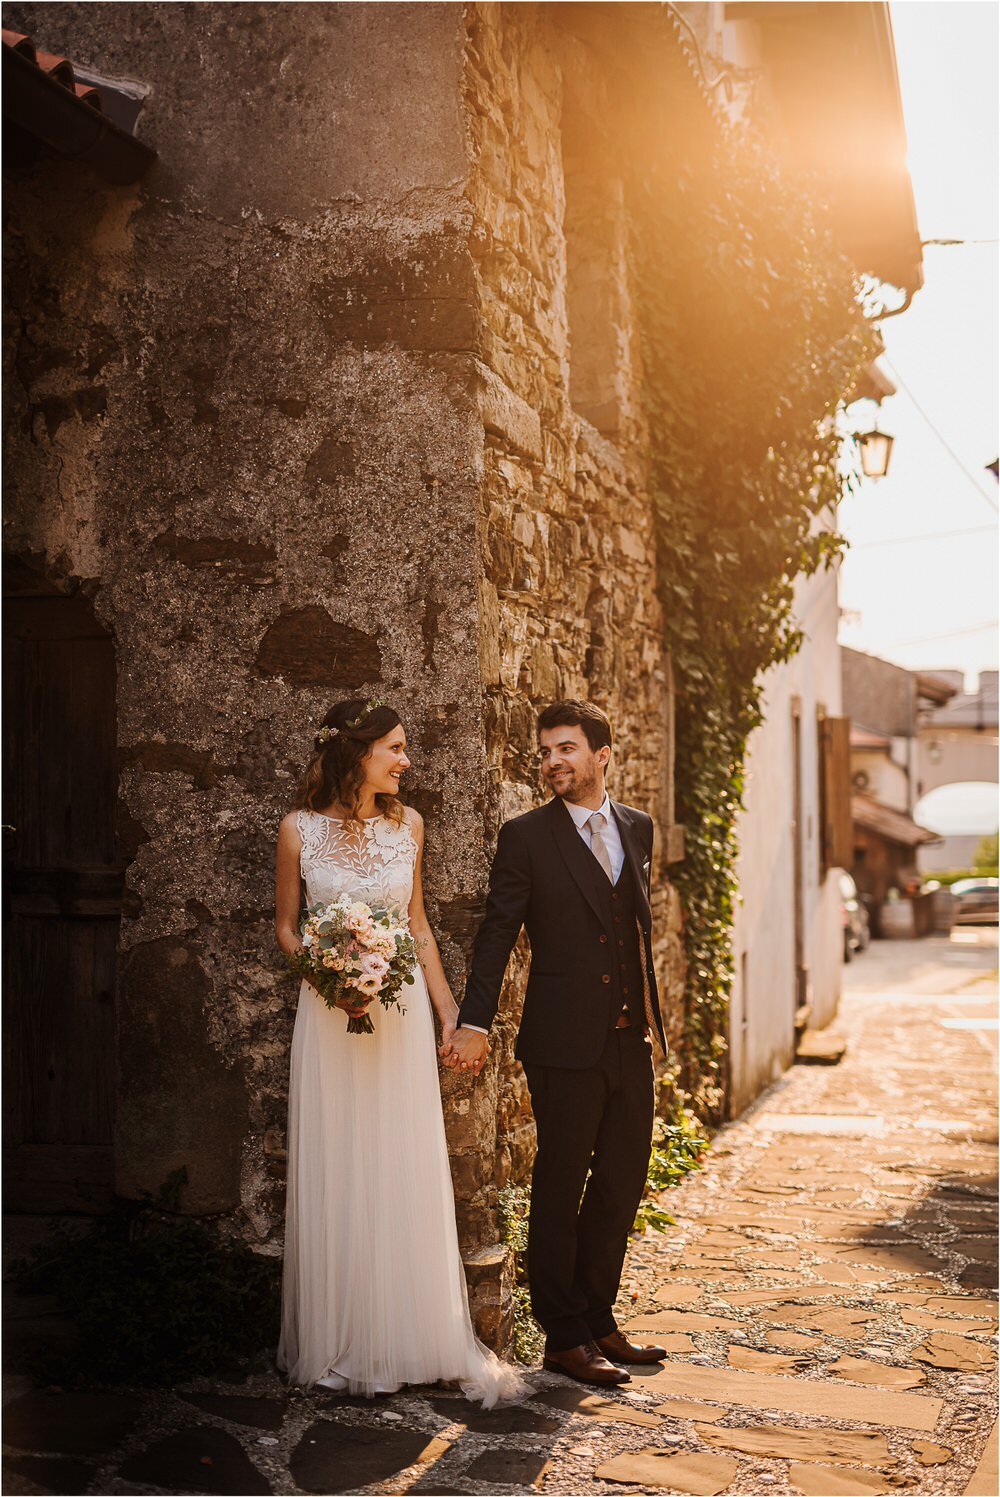 best of wedding photography 2019 photographer italy ireland tuscany santorini greece spain barcelona lake como chateux scotland destination wedding 0176.jpg